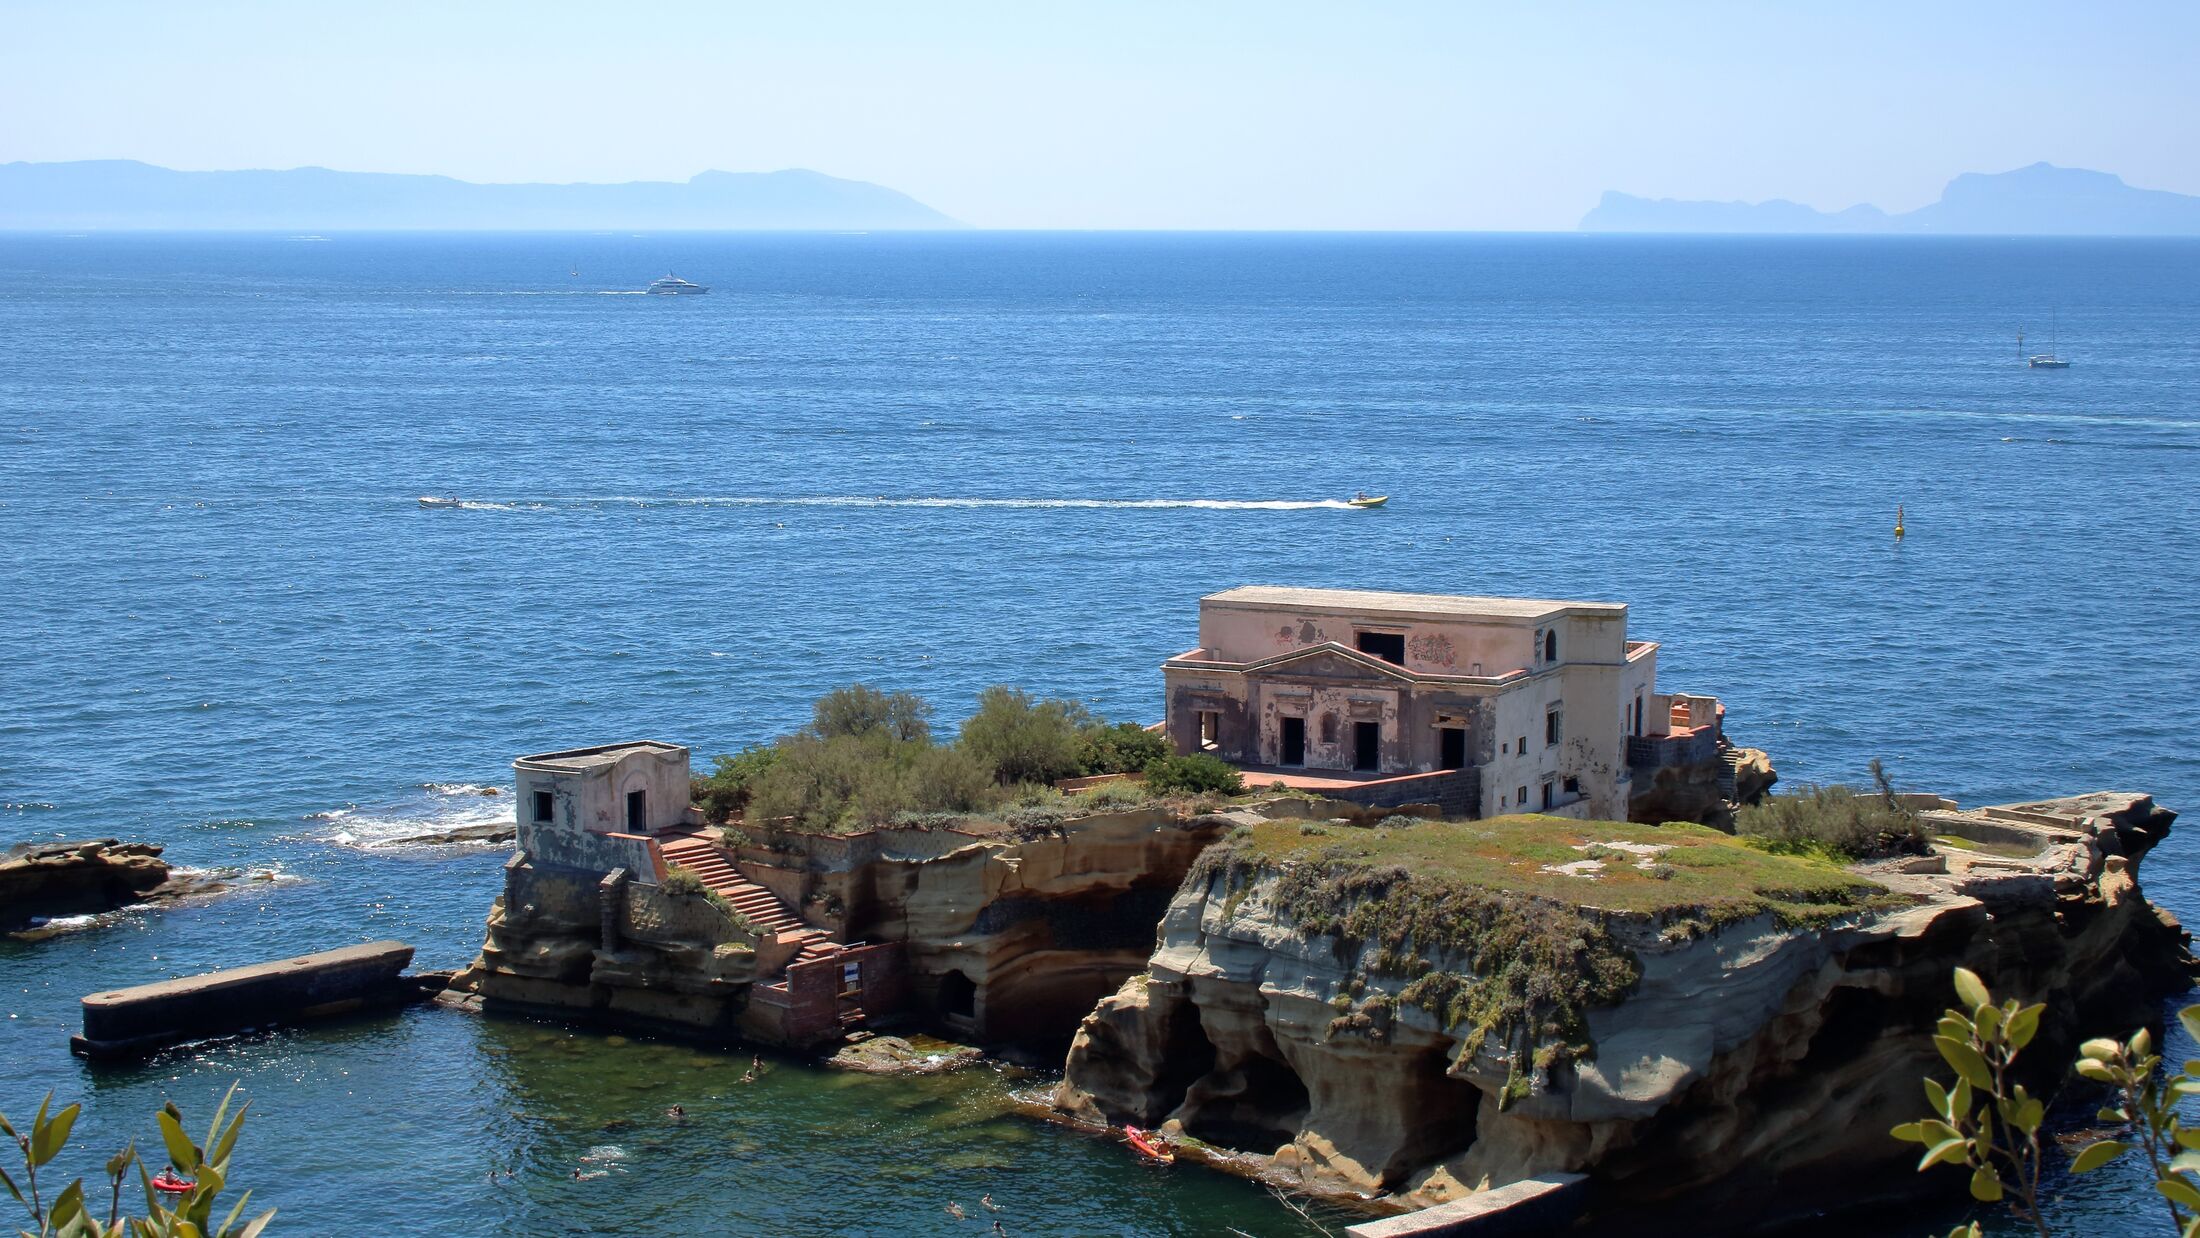 Gaiola protected area and abandoned island at Posillipo, Naples, Italy